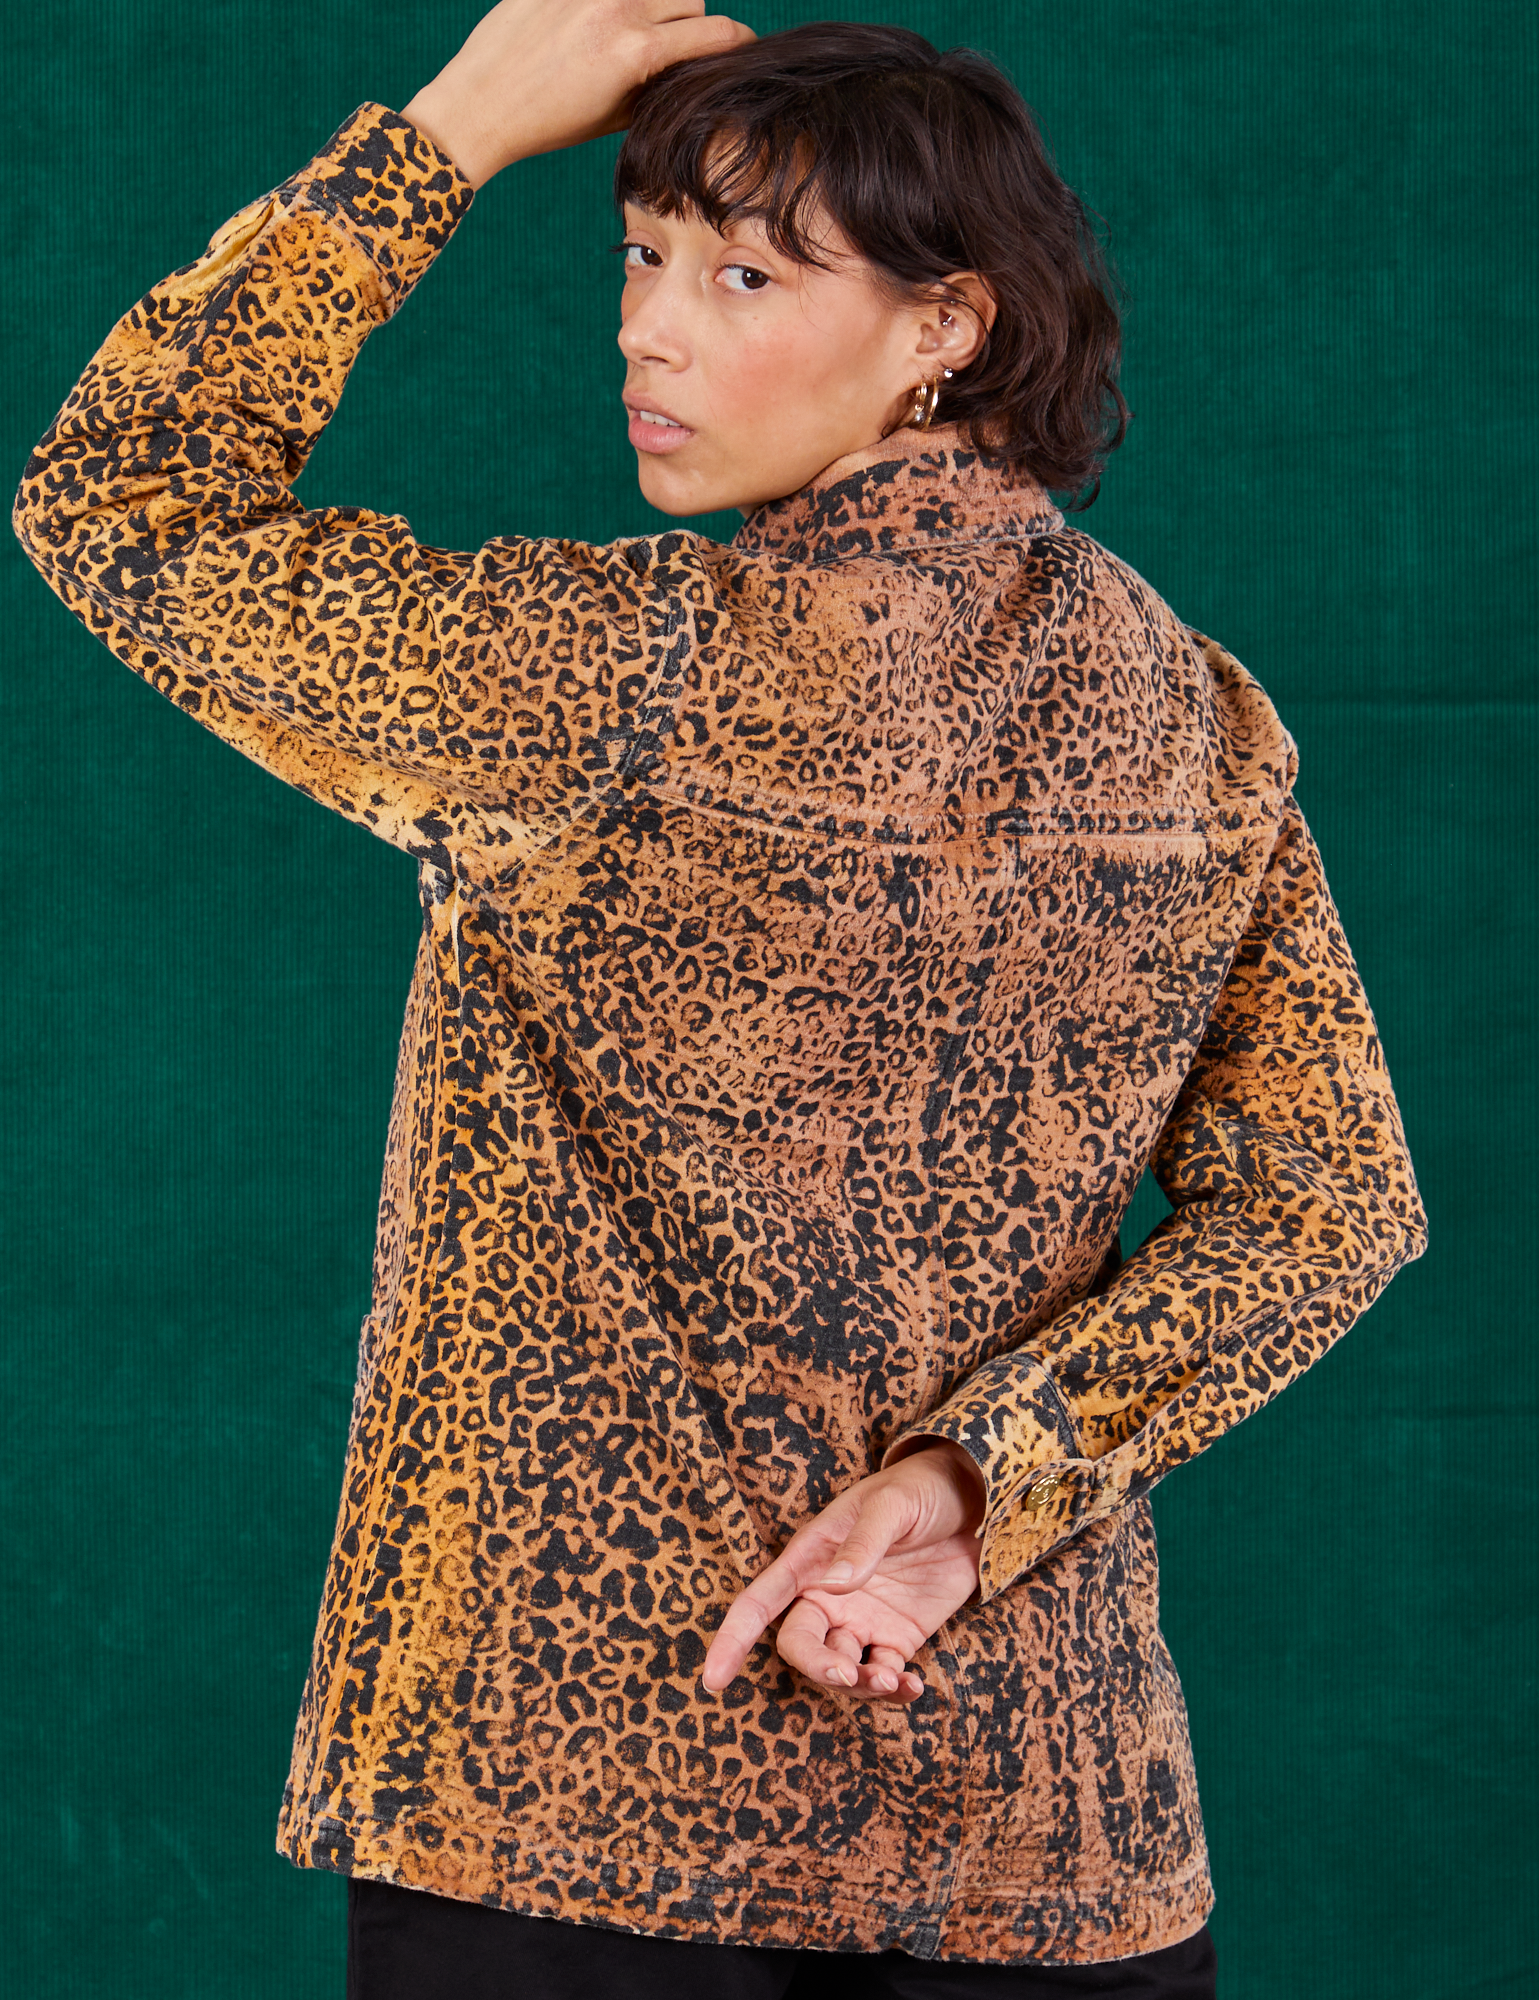 Field Coat in Leopard Print back view on Tiara